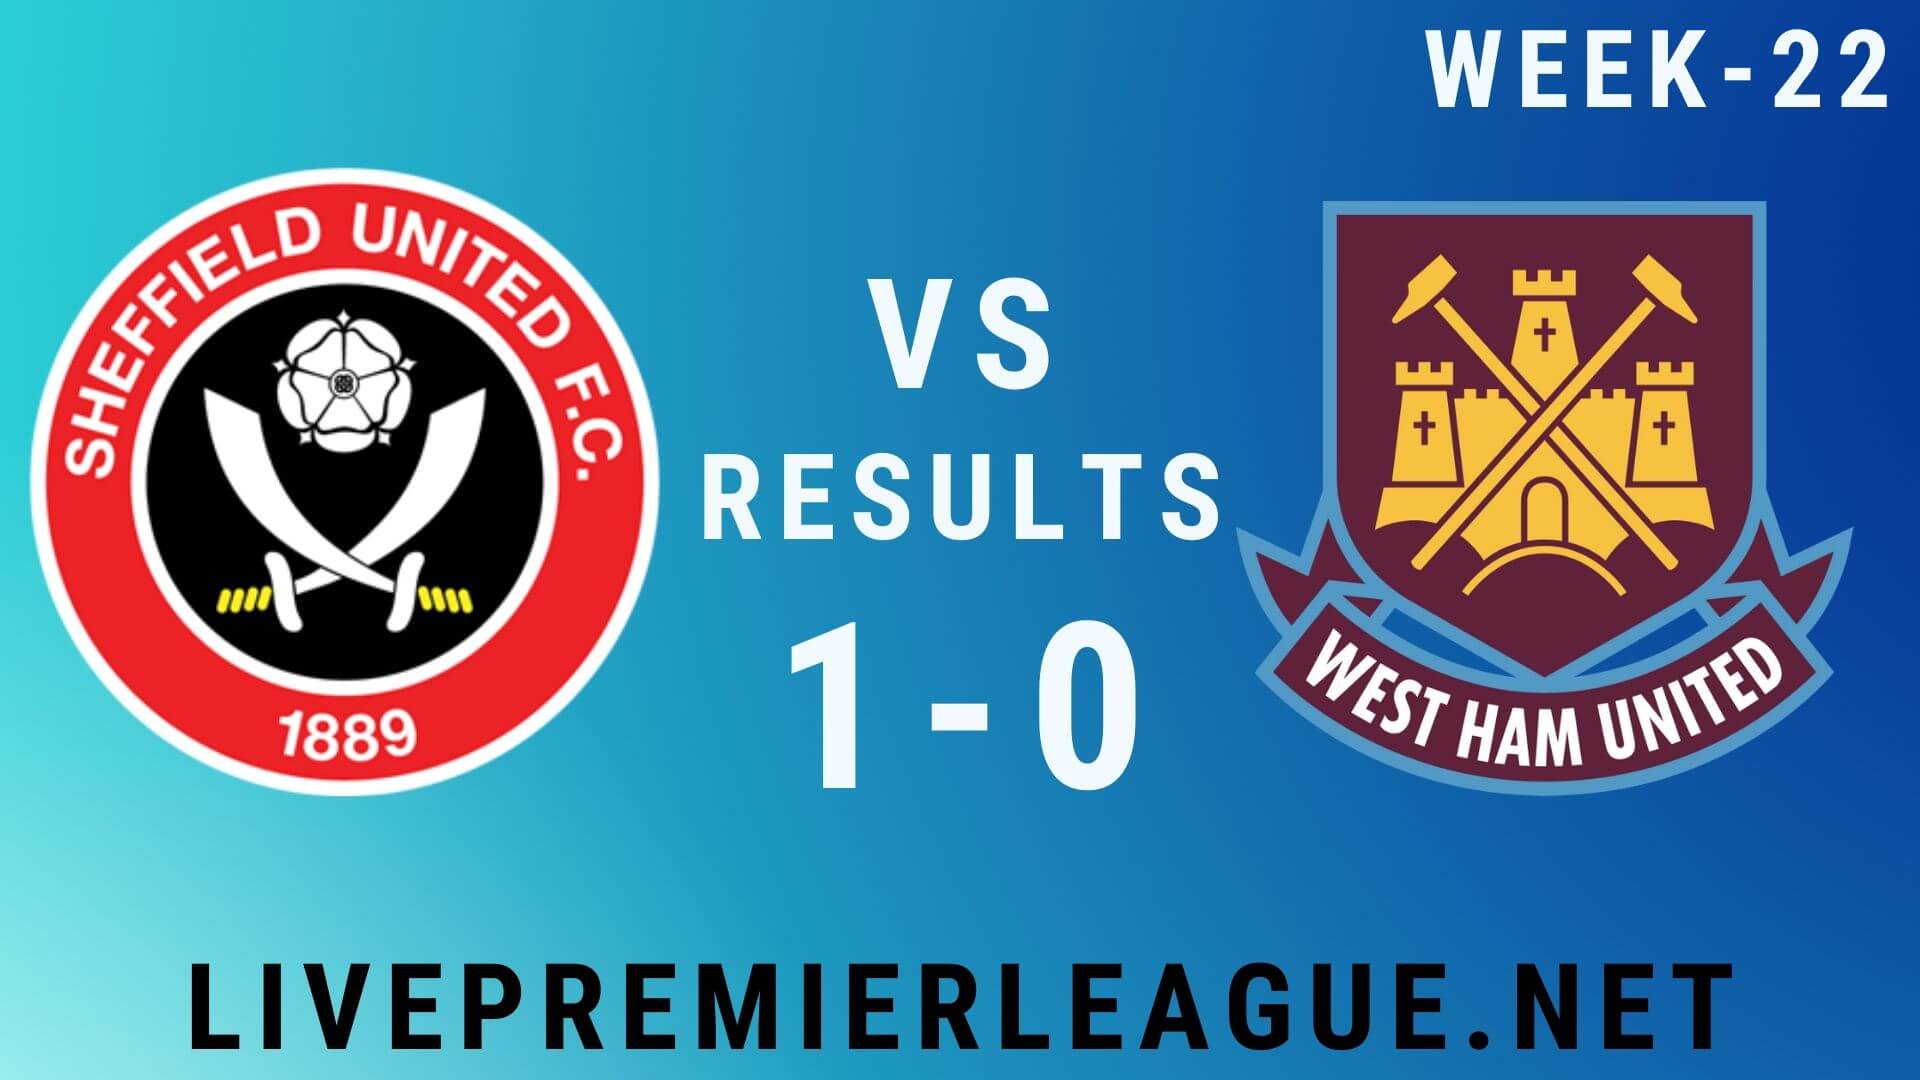 Sheffield United Vs West Ham United | Week 22 Result 2020